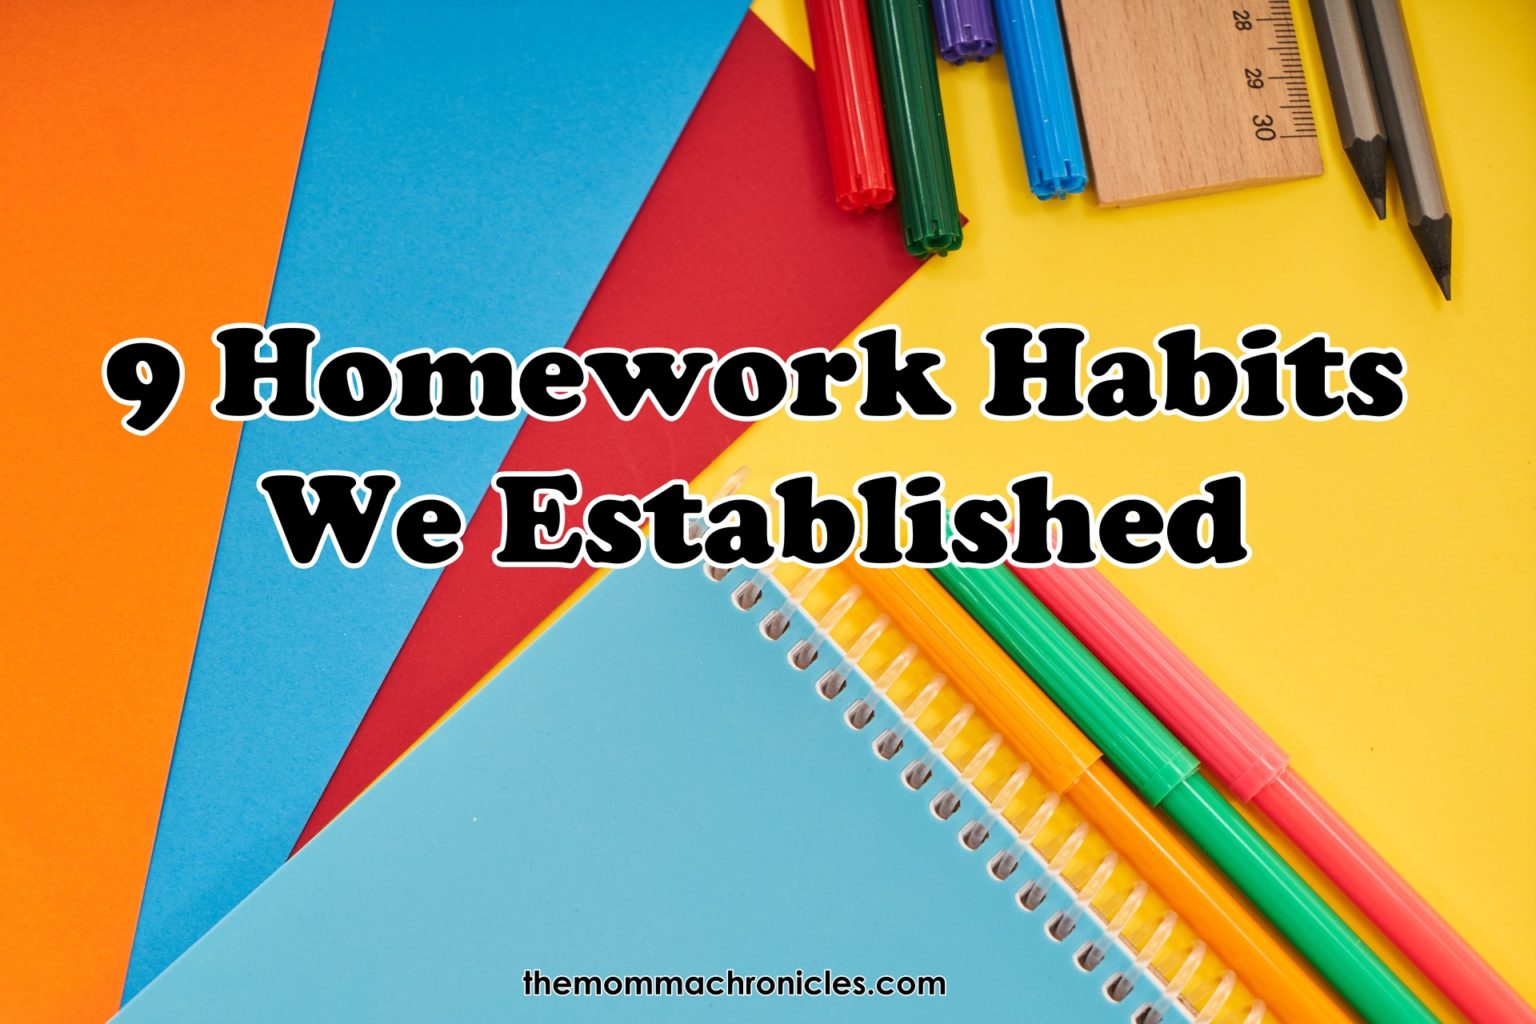 1.4.2 study smart homework habits